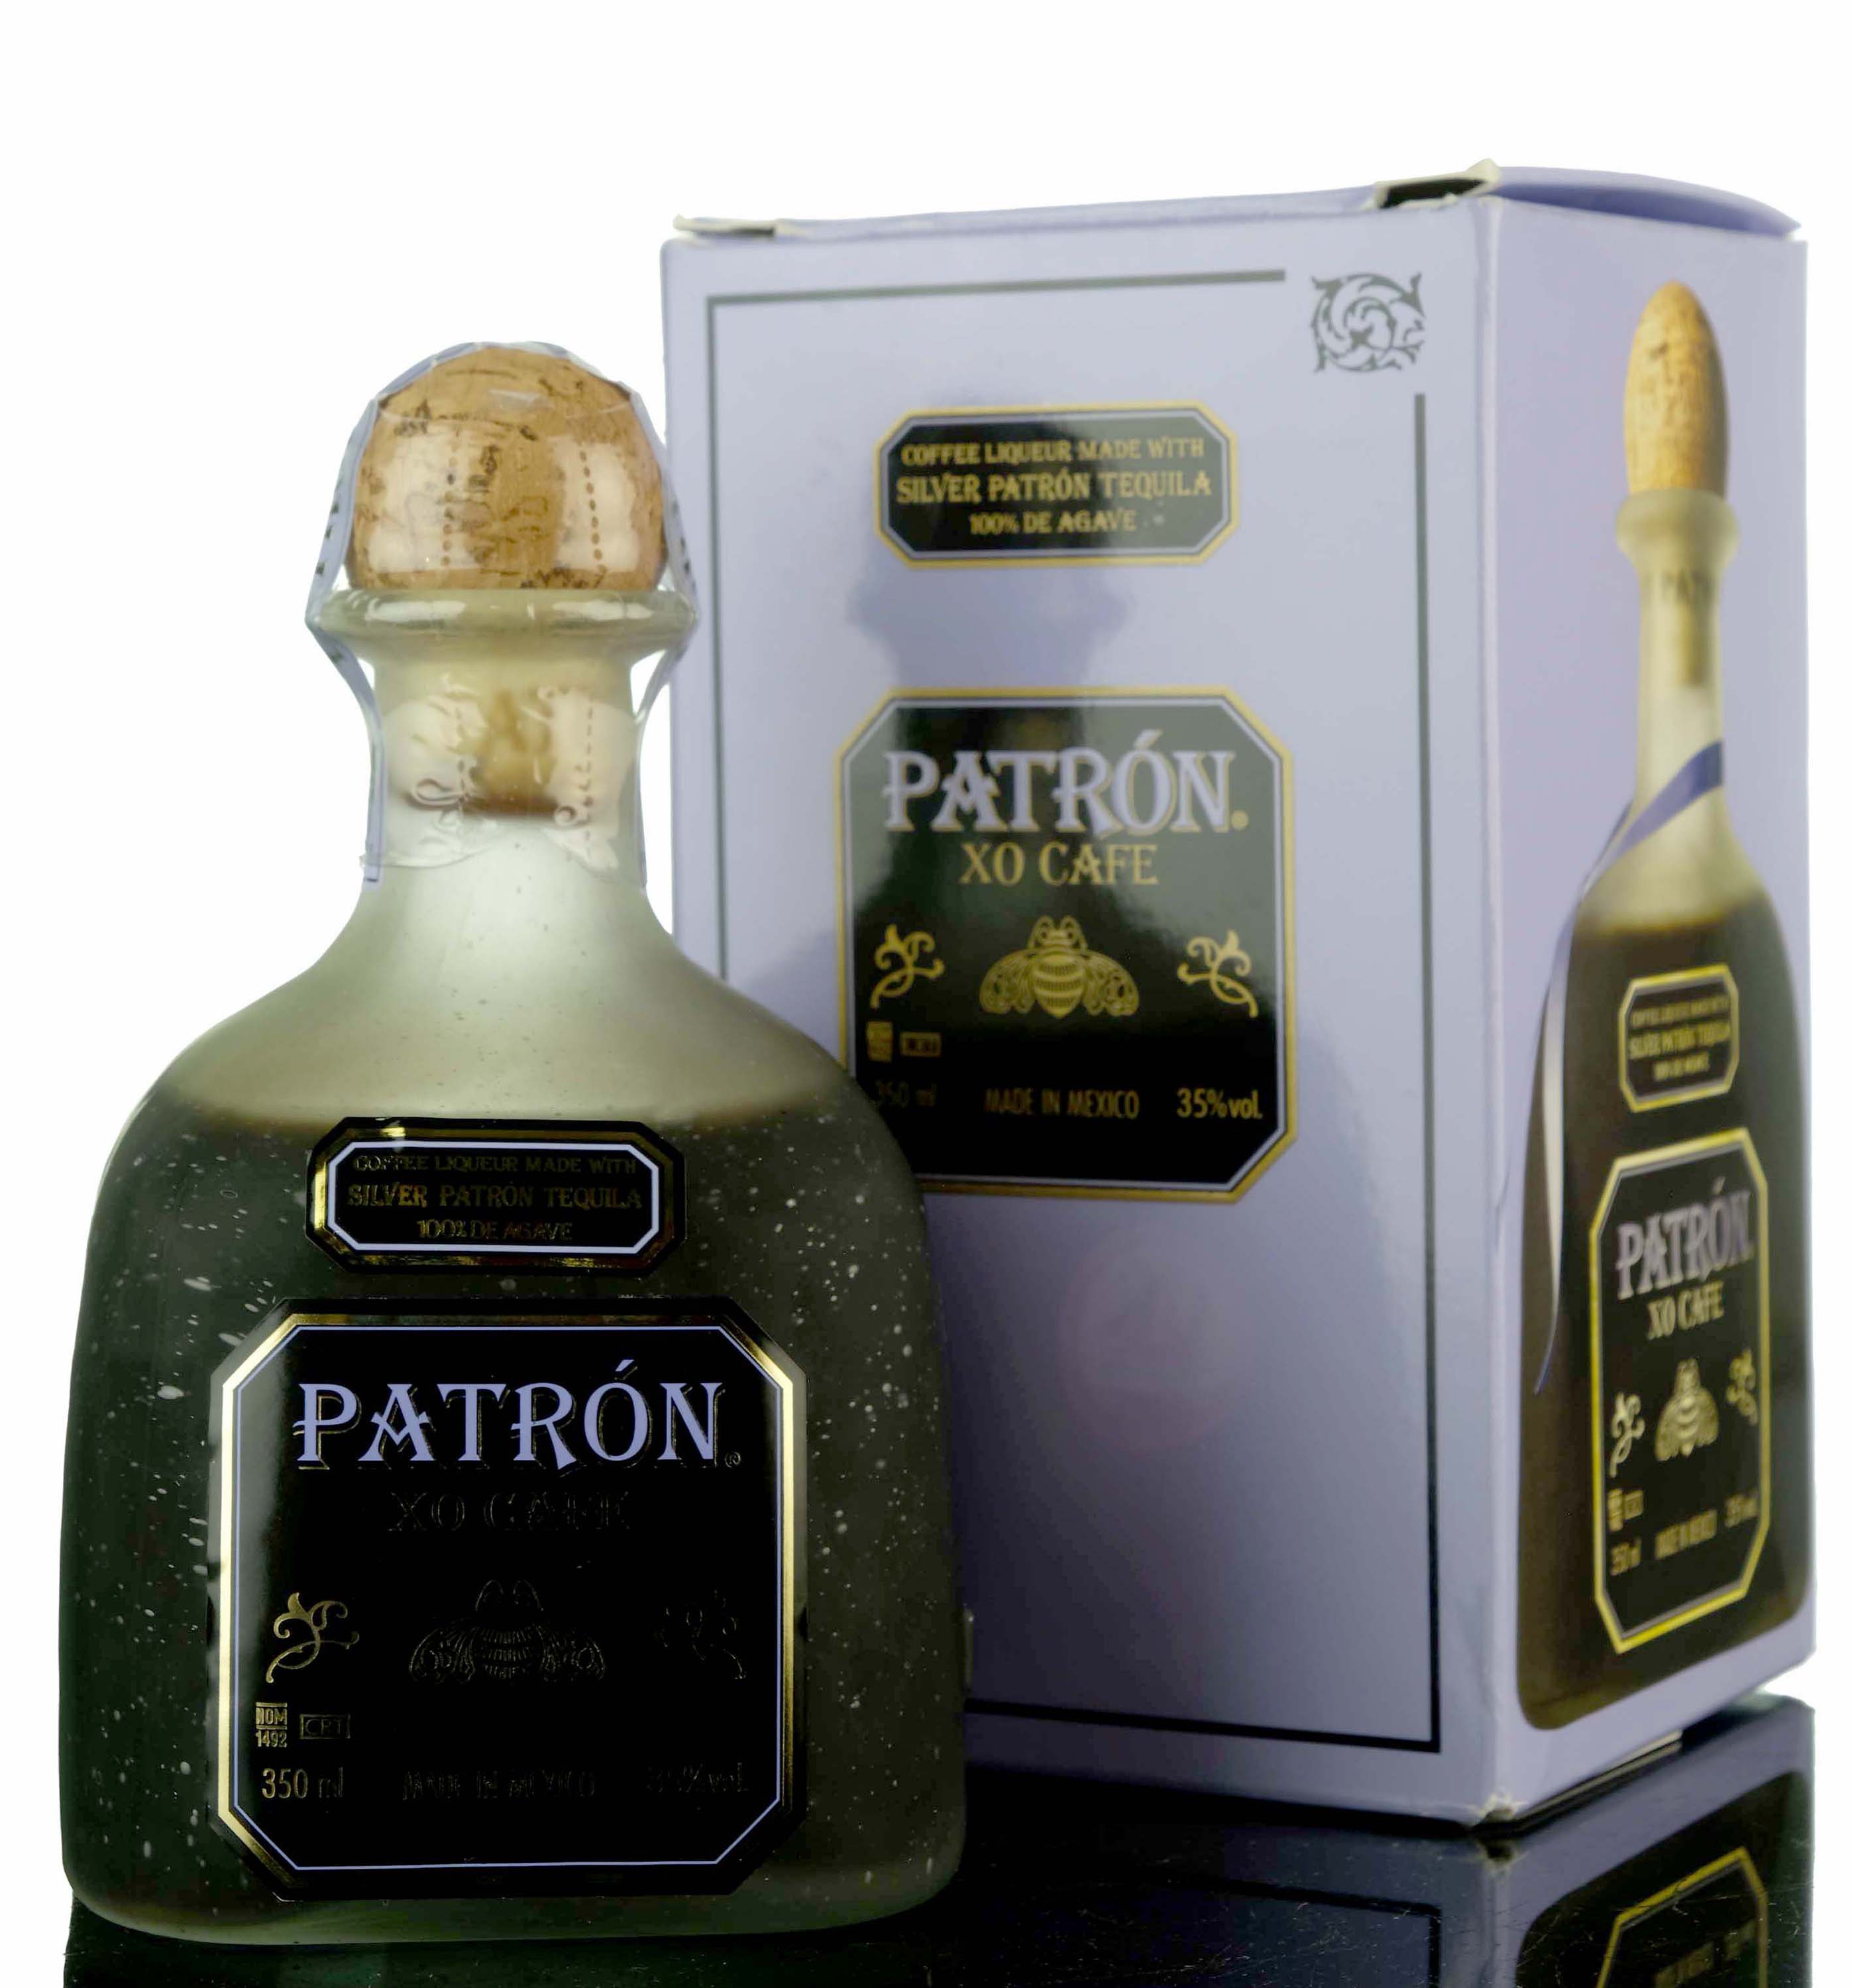 Patron Silver Tequila XO Cafe - Half Bottle